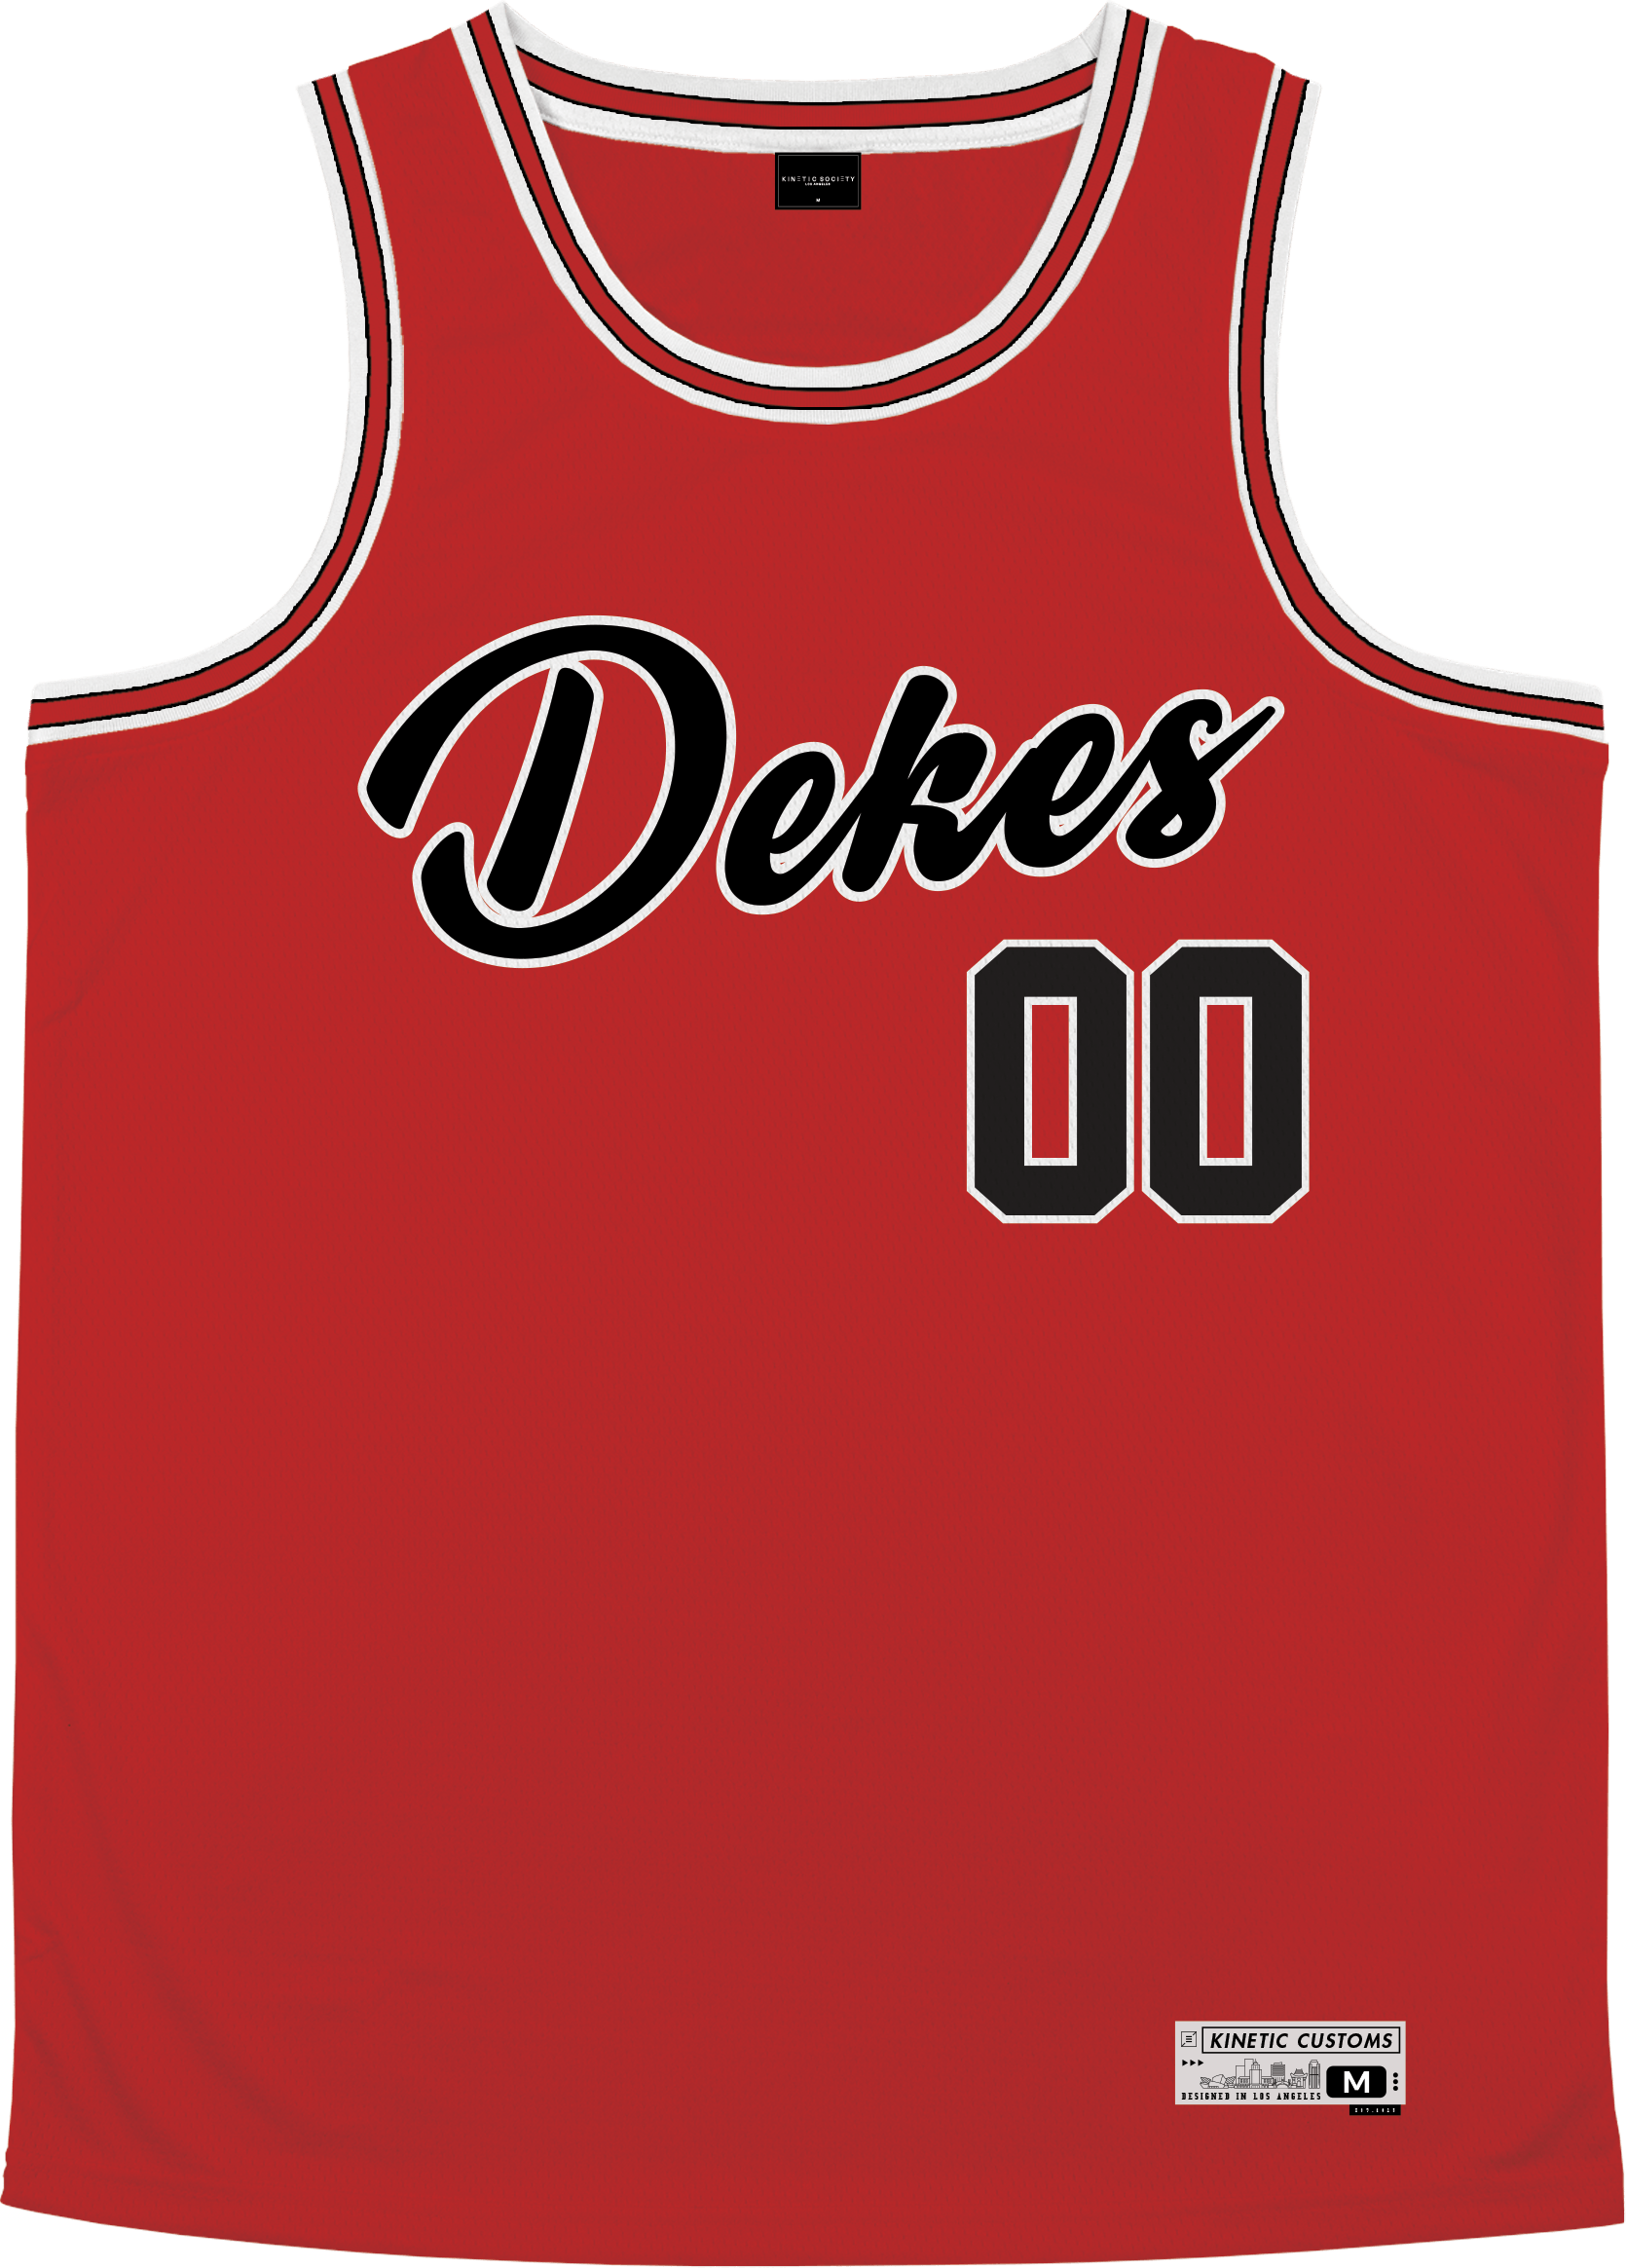 Delta Kappa Epsilon - Big Red Basketball Jersey - Kinetic Society